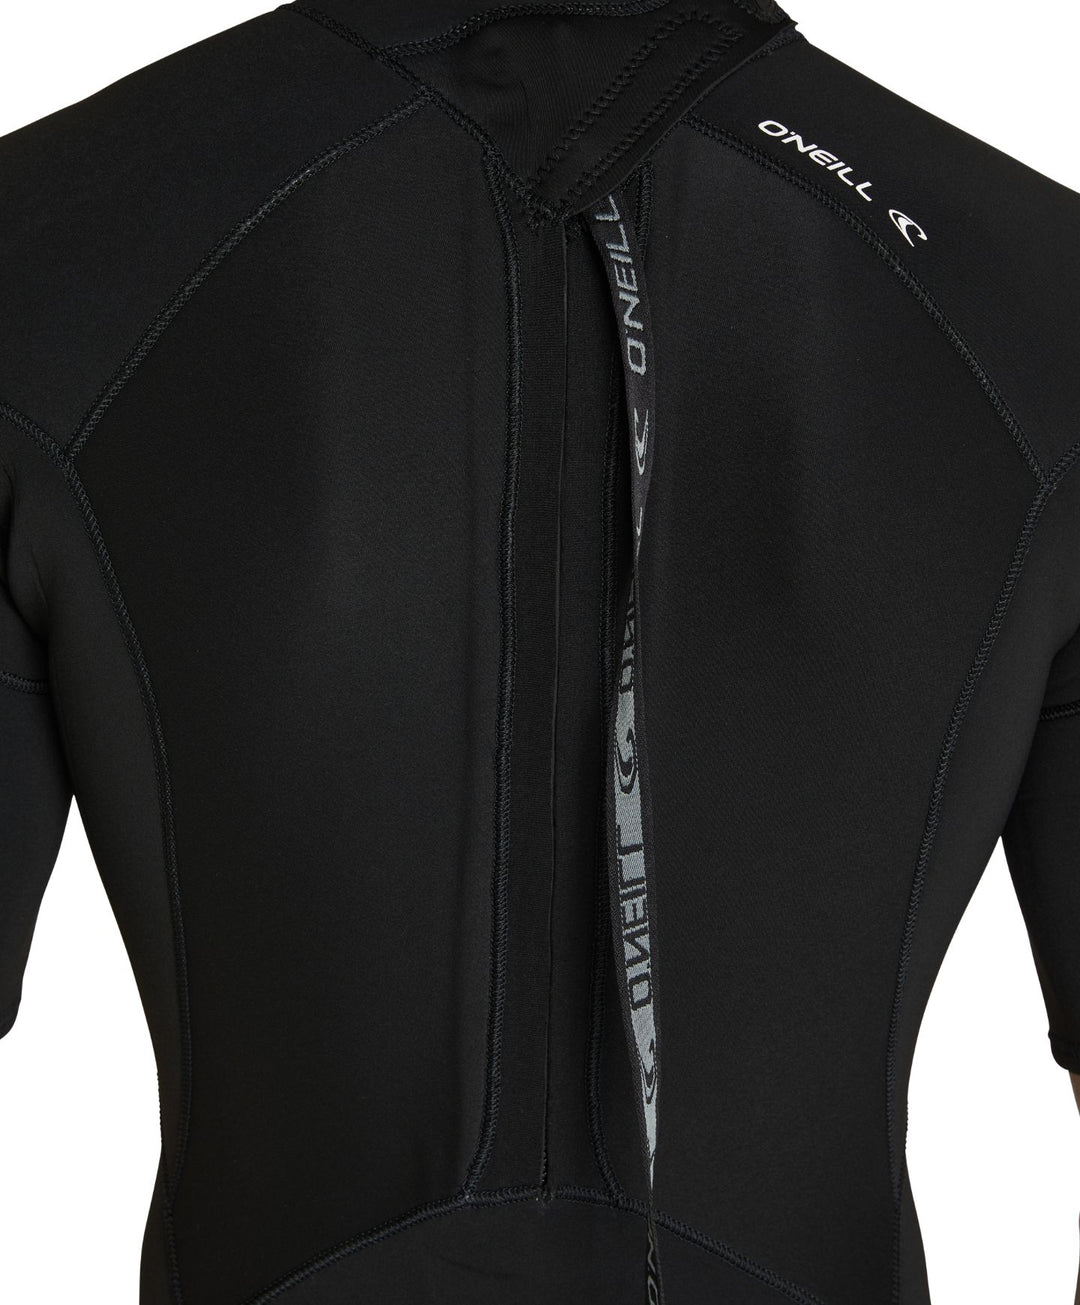 Defender 2mm Back Zip Sealed Springsuit Wetsuit - Black